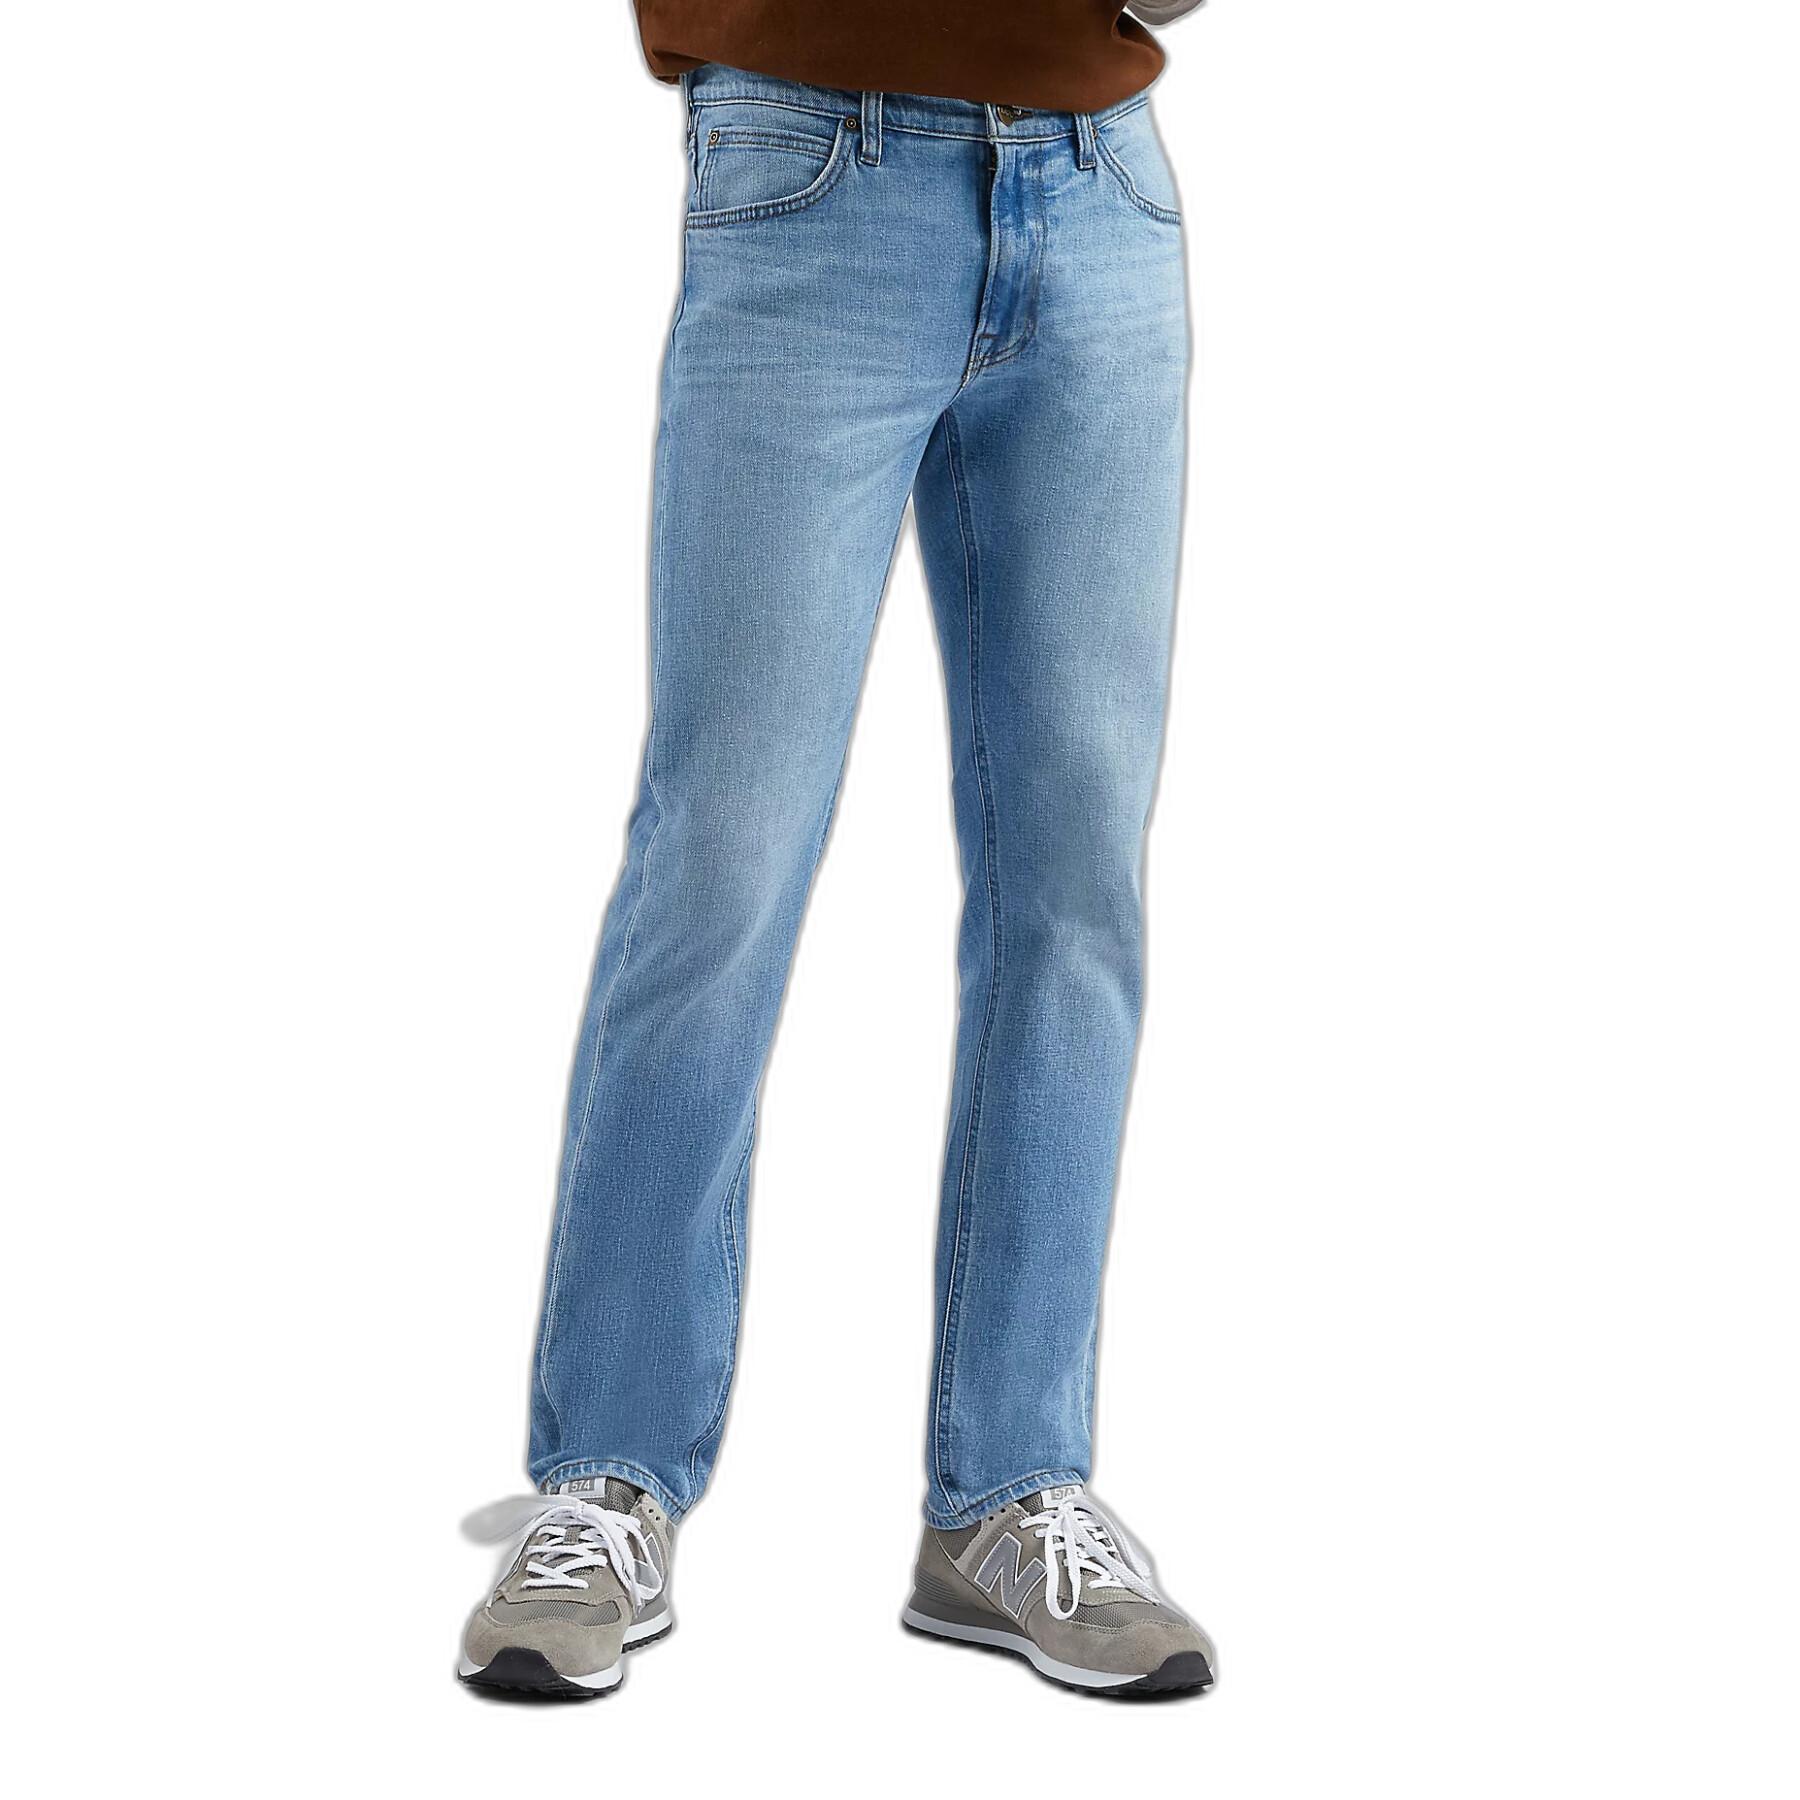 Zipped jeans Lee Daren Fly